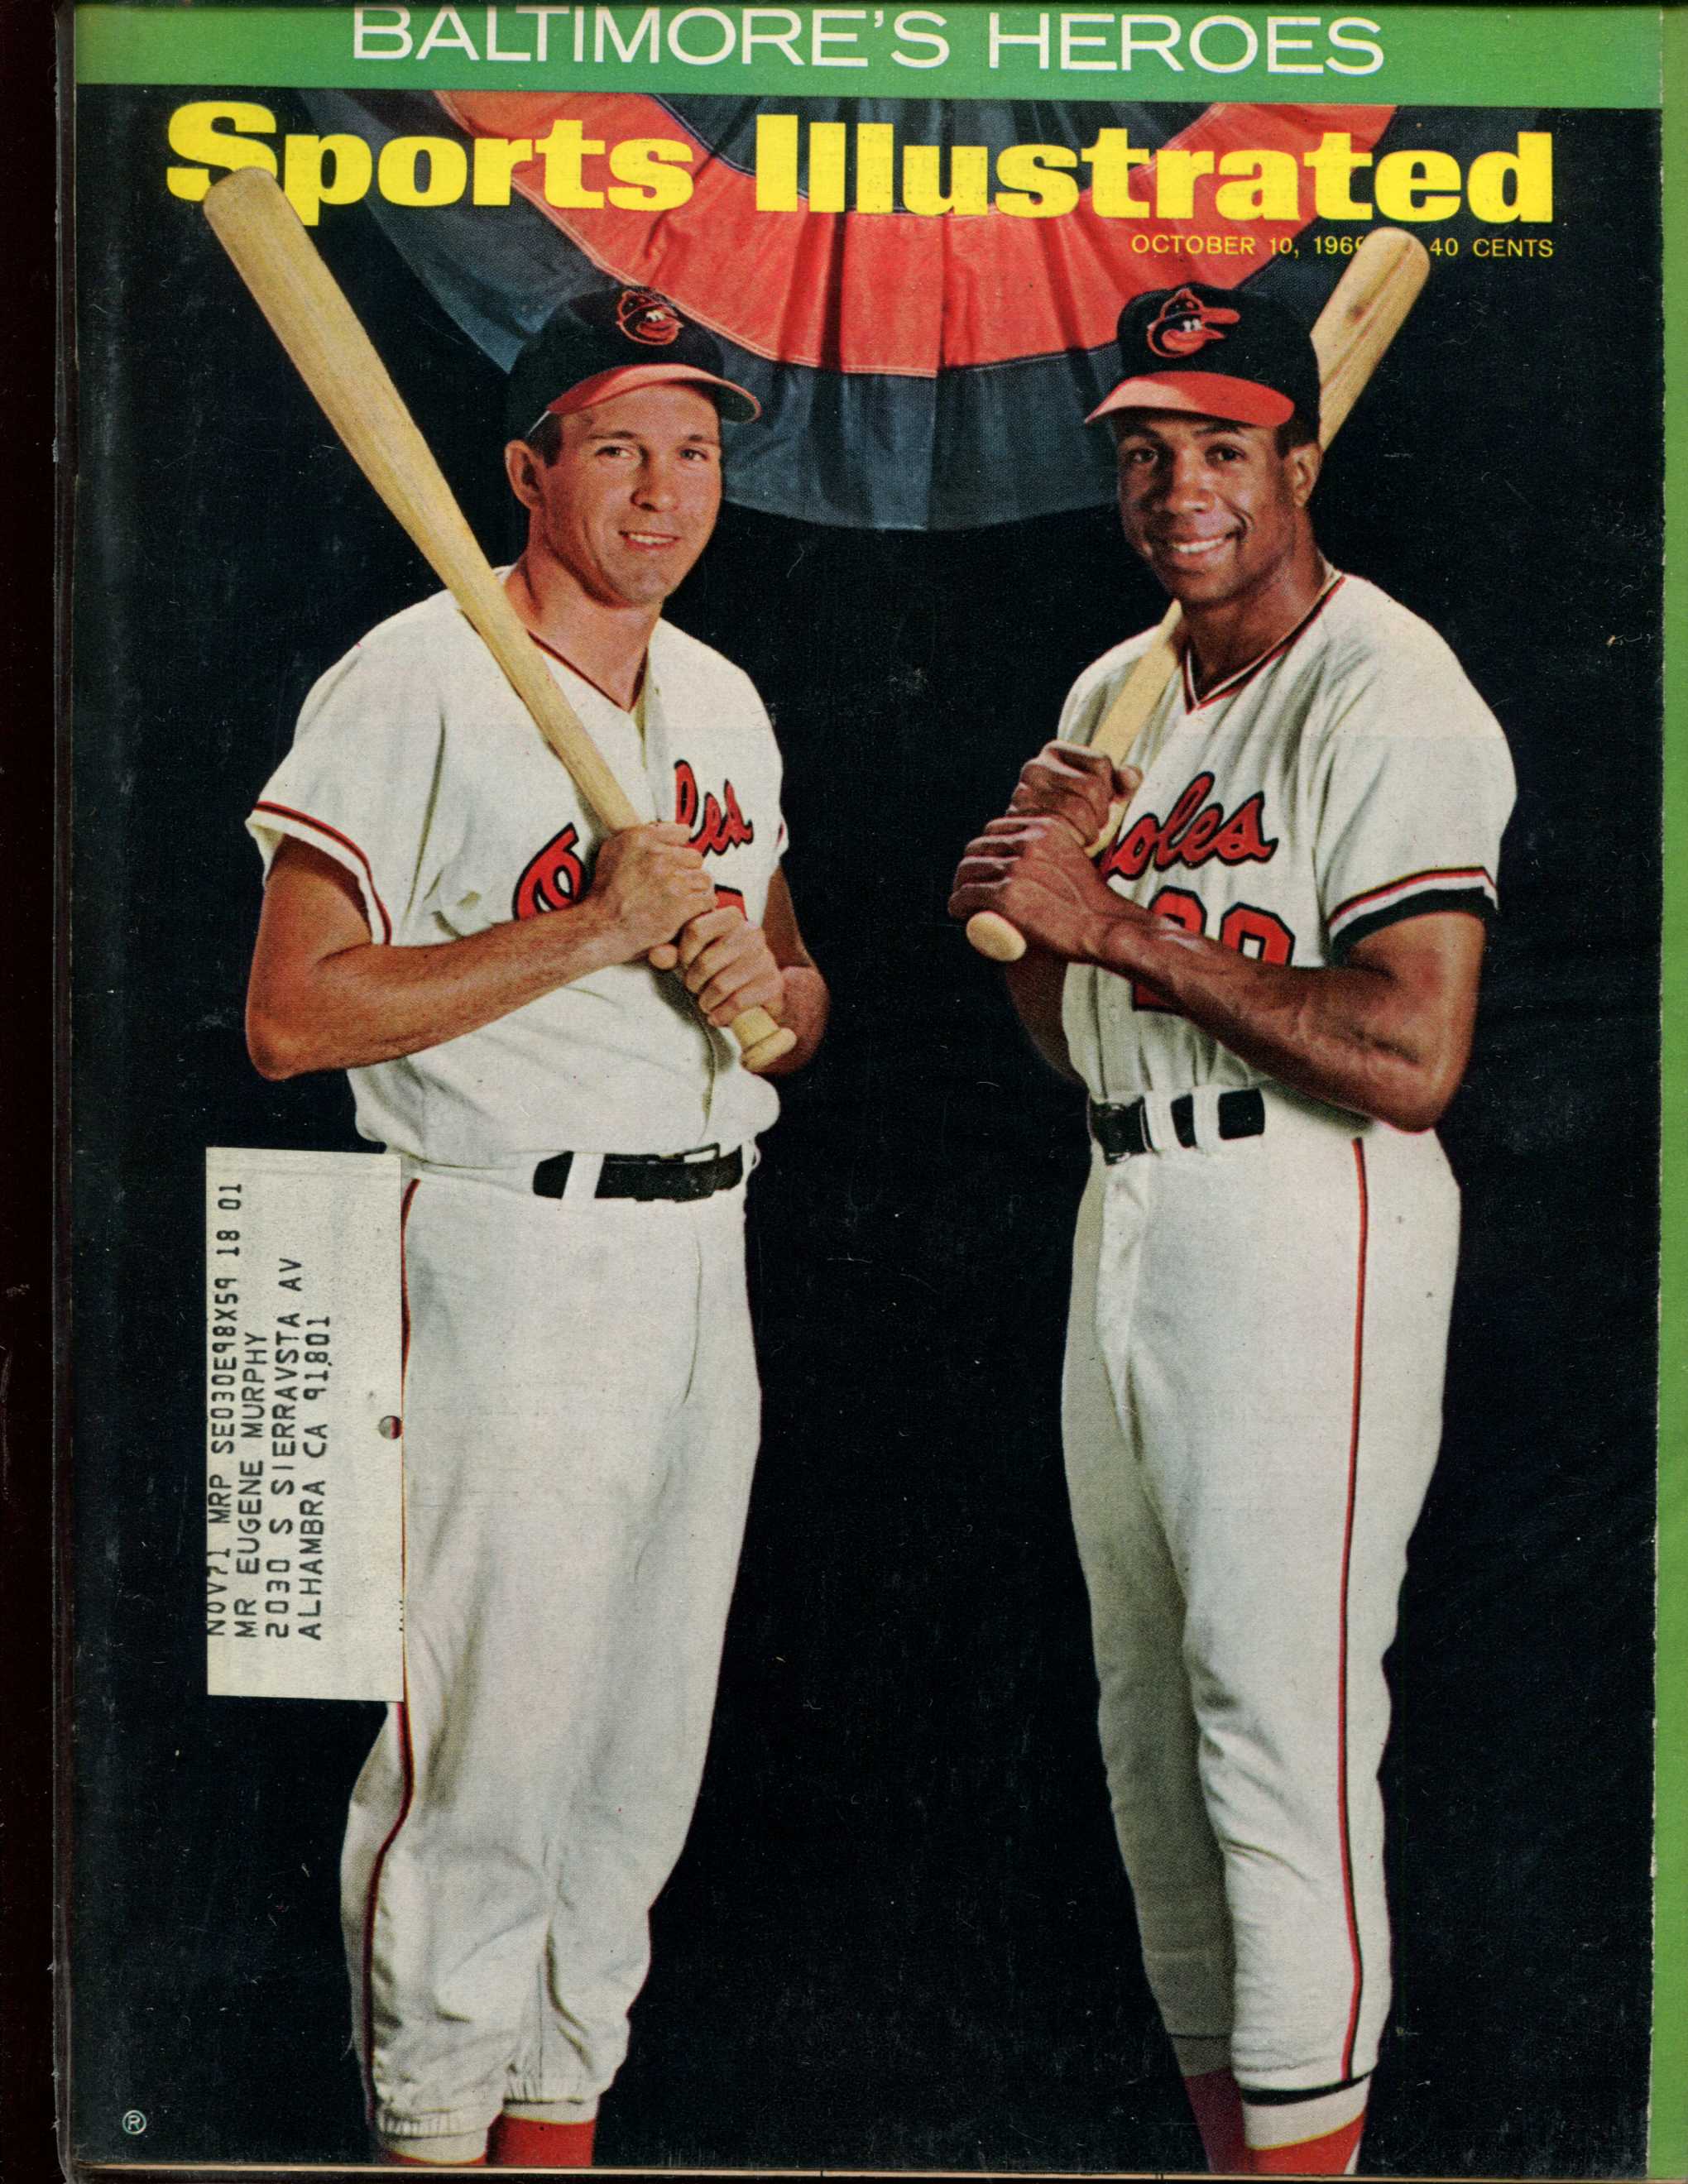 Framed Frank Robinson - Baseball Card Pose - Baltimore Orioles